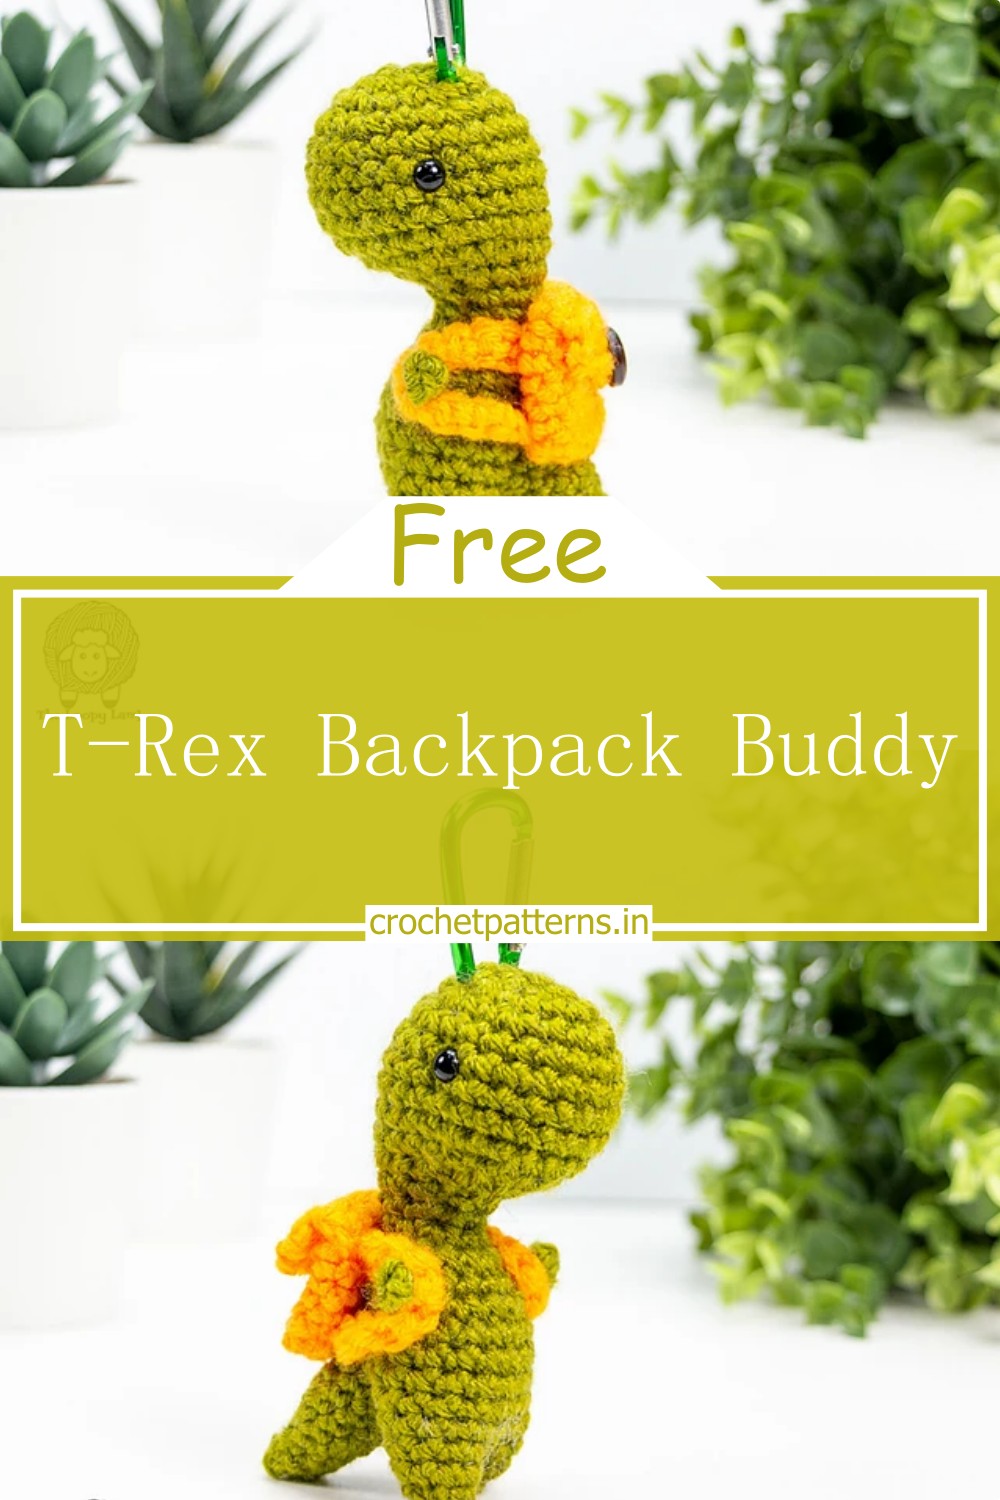 T-Rex Backpack Buddy